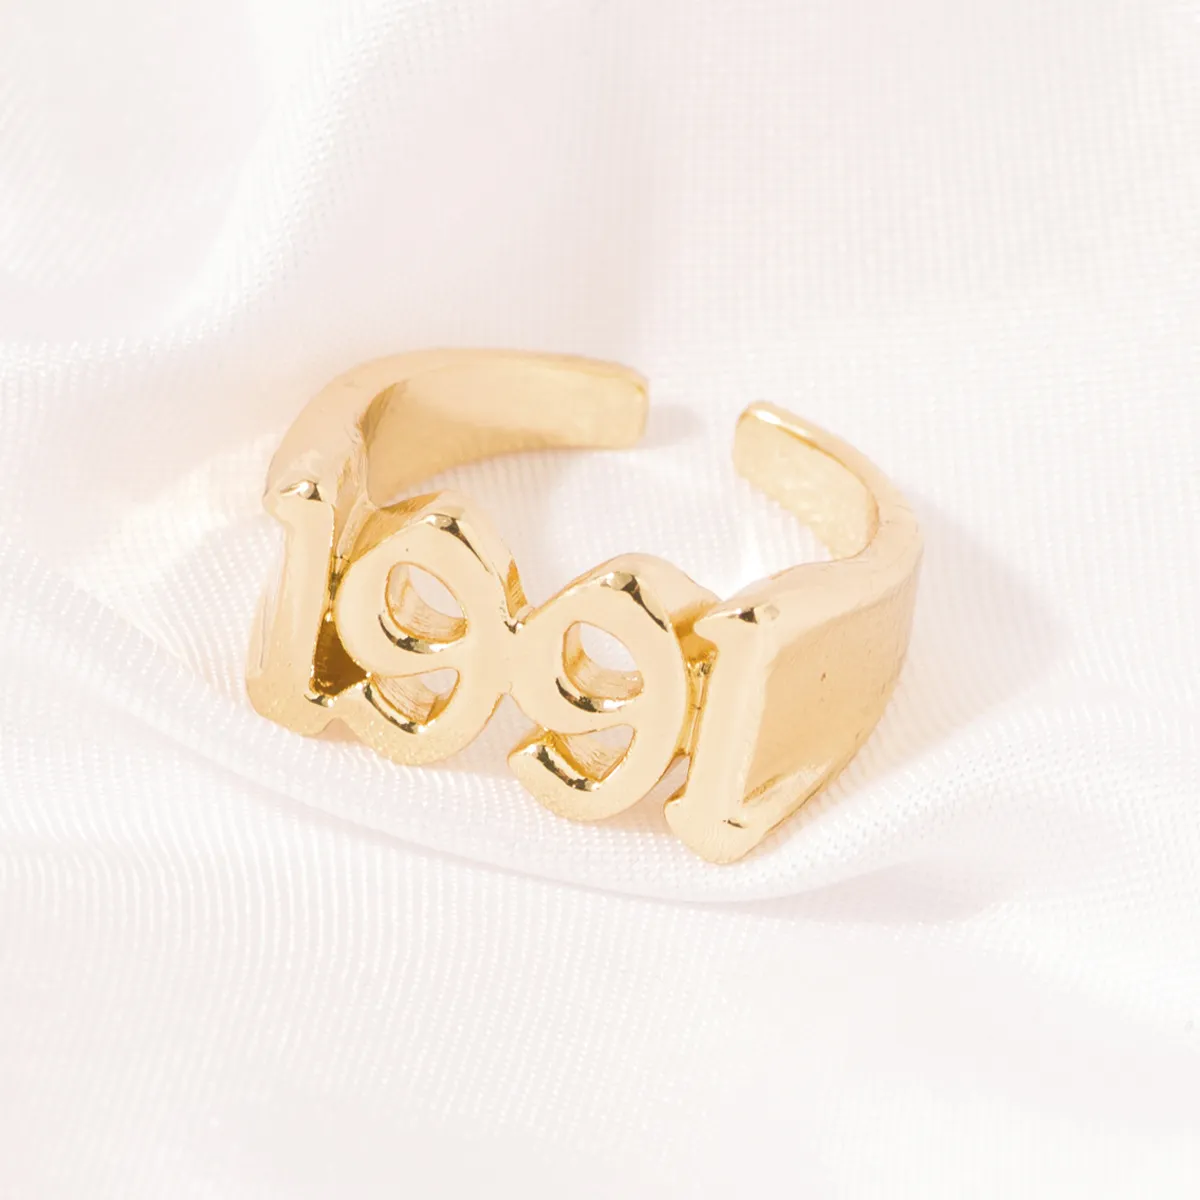 18K Gold Birth Year Ring, Gold Year Ring, Old English Font Year Ring for  Women | eBay